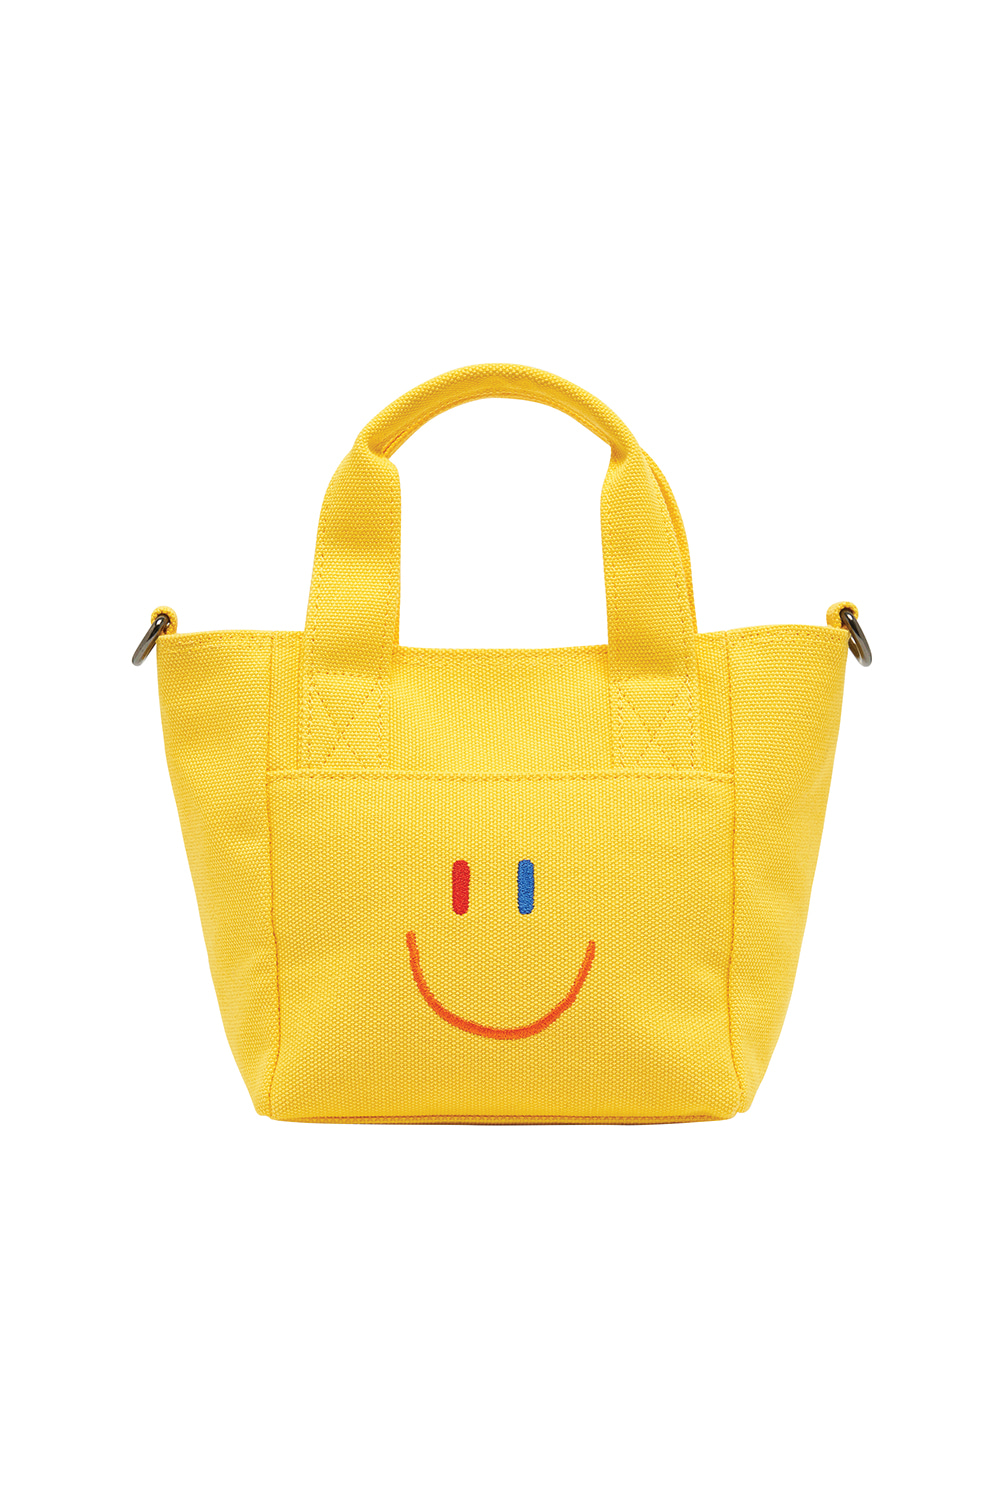 LaLa Mini Bag [Yellow]